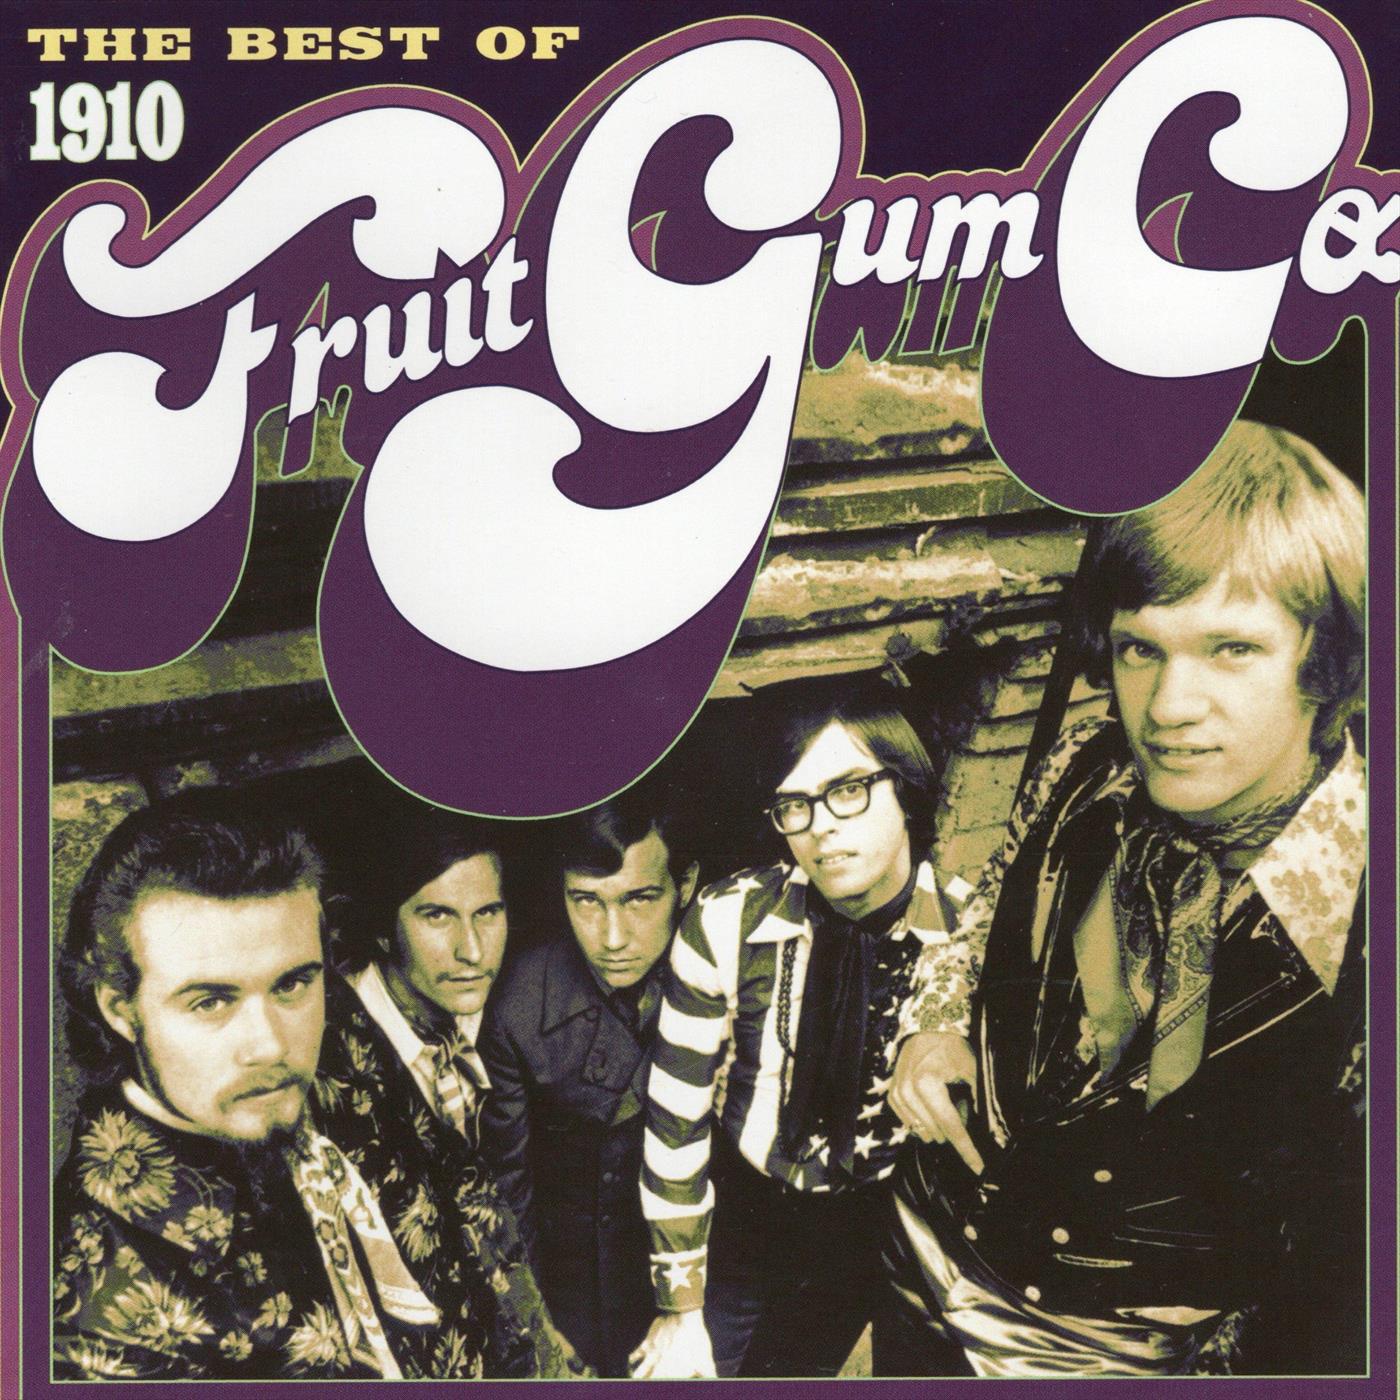 1910 Fruitgum Company - Soul Struttin’